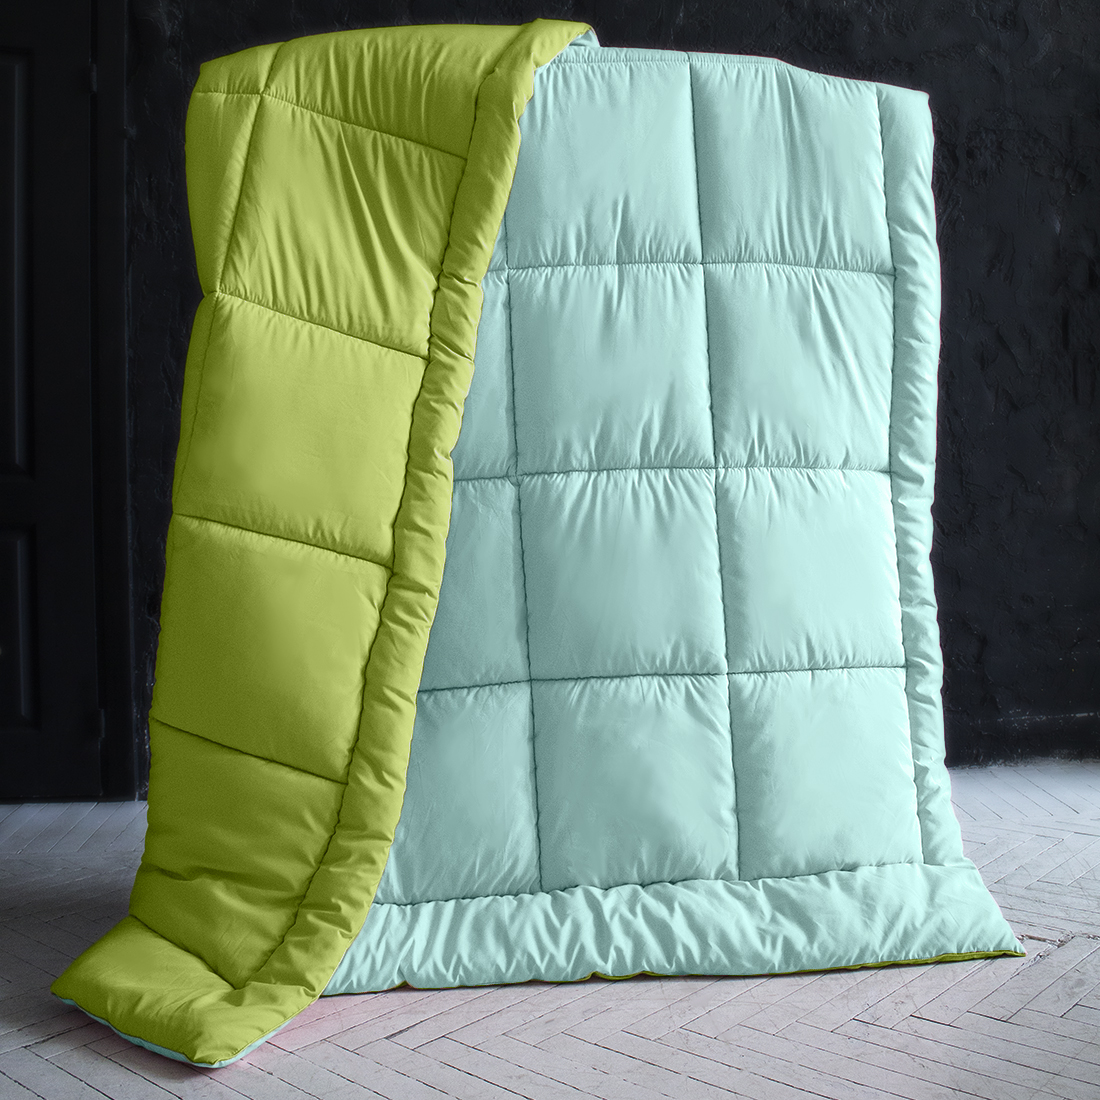 Одеяло MultiColor Цвет: Нежно-Голубой/Лайм (175х205 см), размер 175х205 см pva320042 Одеяло MultiColor Цвет: Нежно-Голубой/Лайм (175х205 см) - фото 1